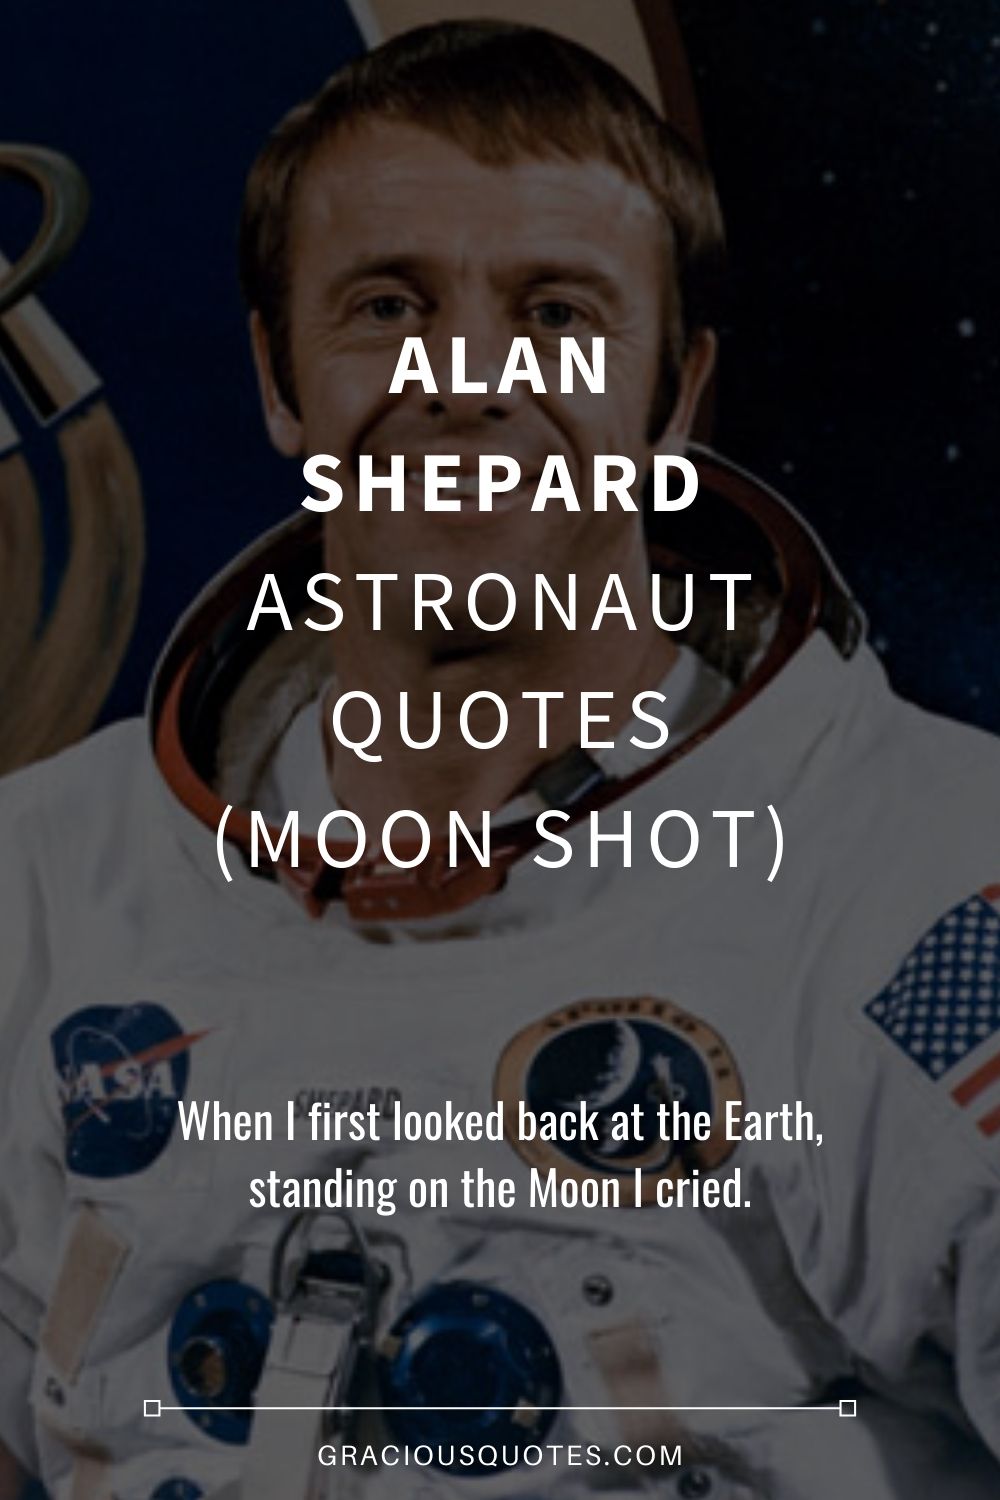 Alan Shepard Astronaut Quotes (MOON SHOT) - Gracious Quotes